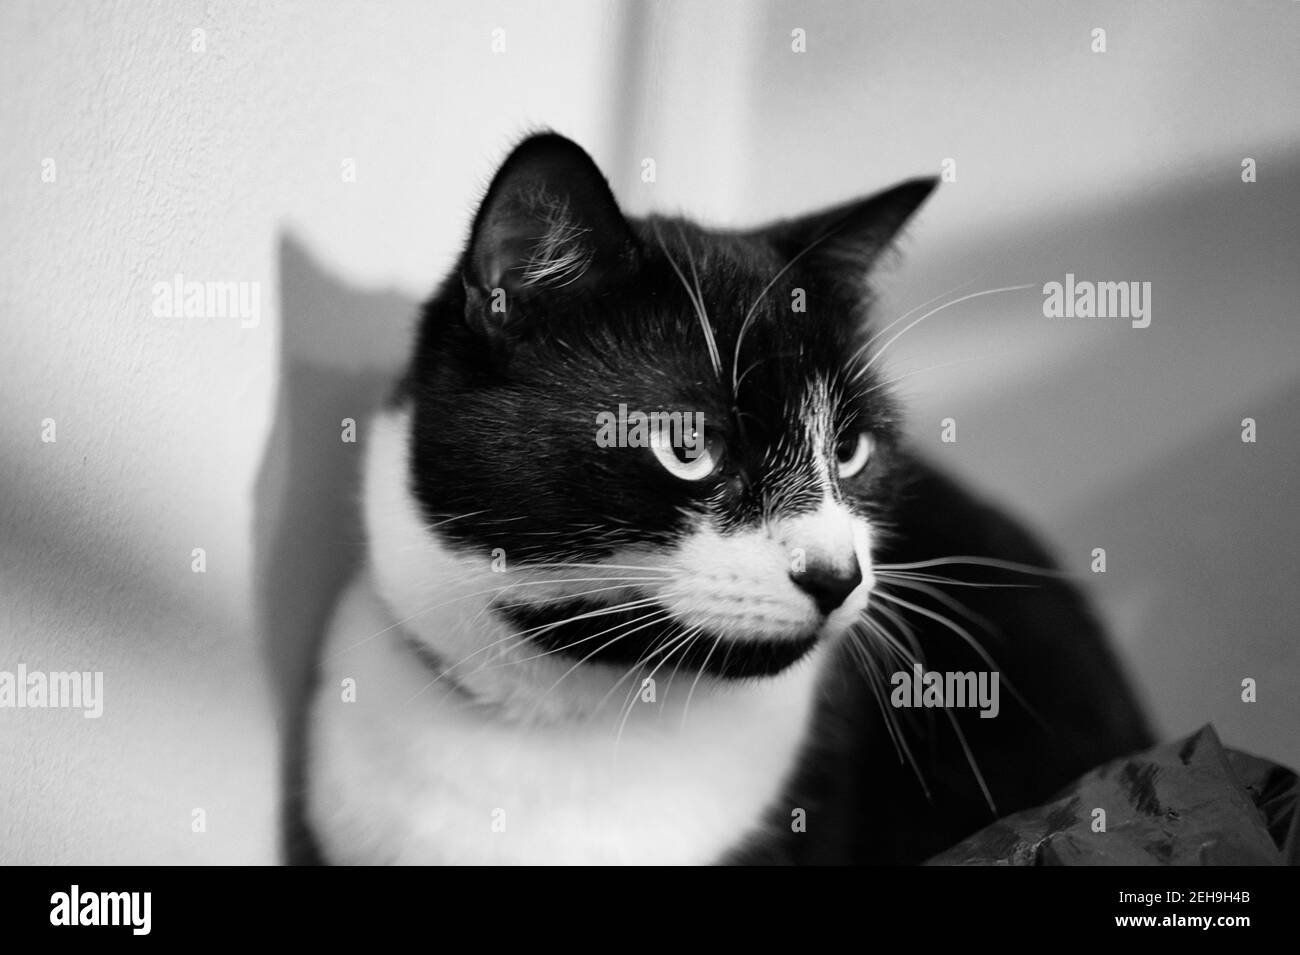 Black and white cat. Stock Photo